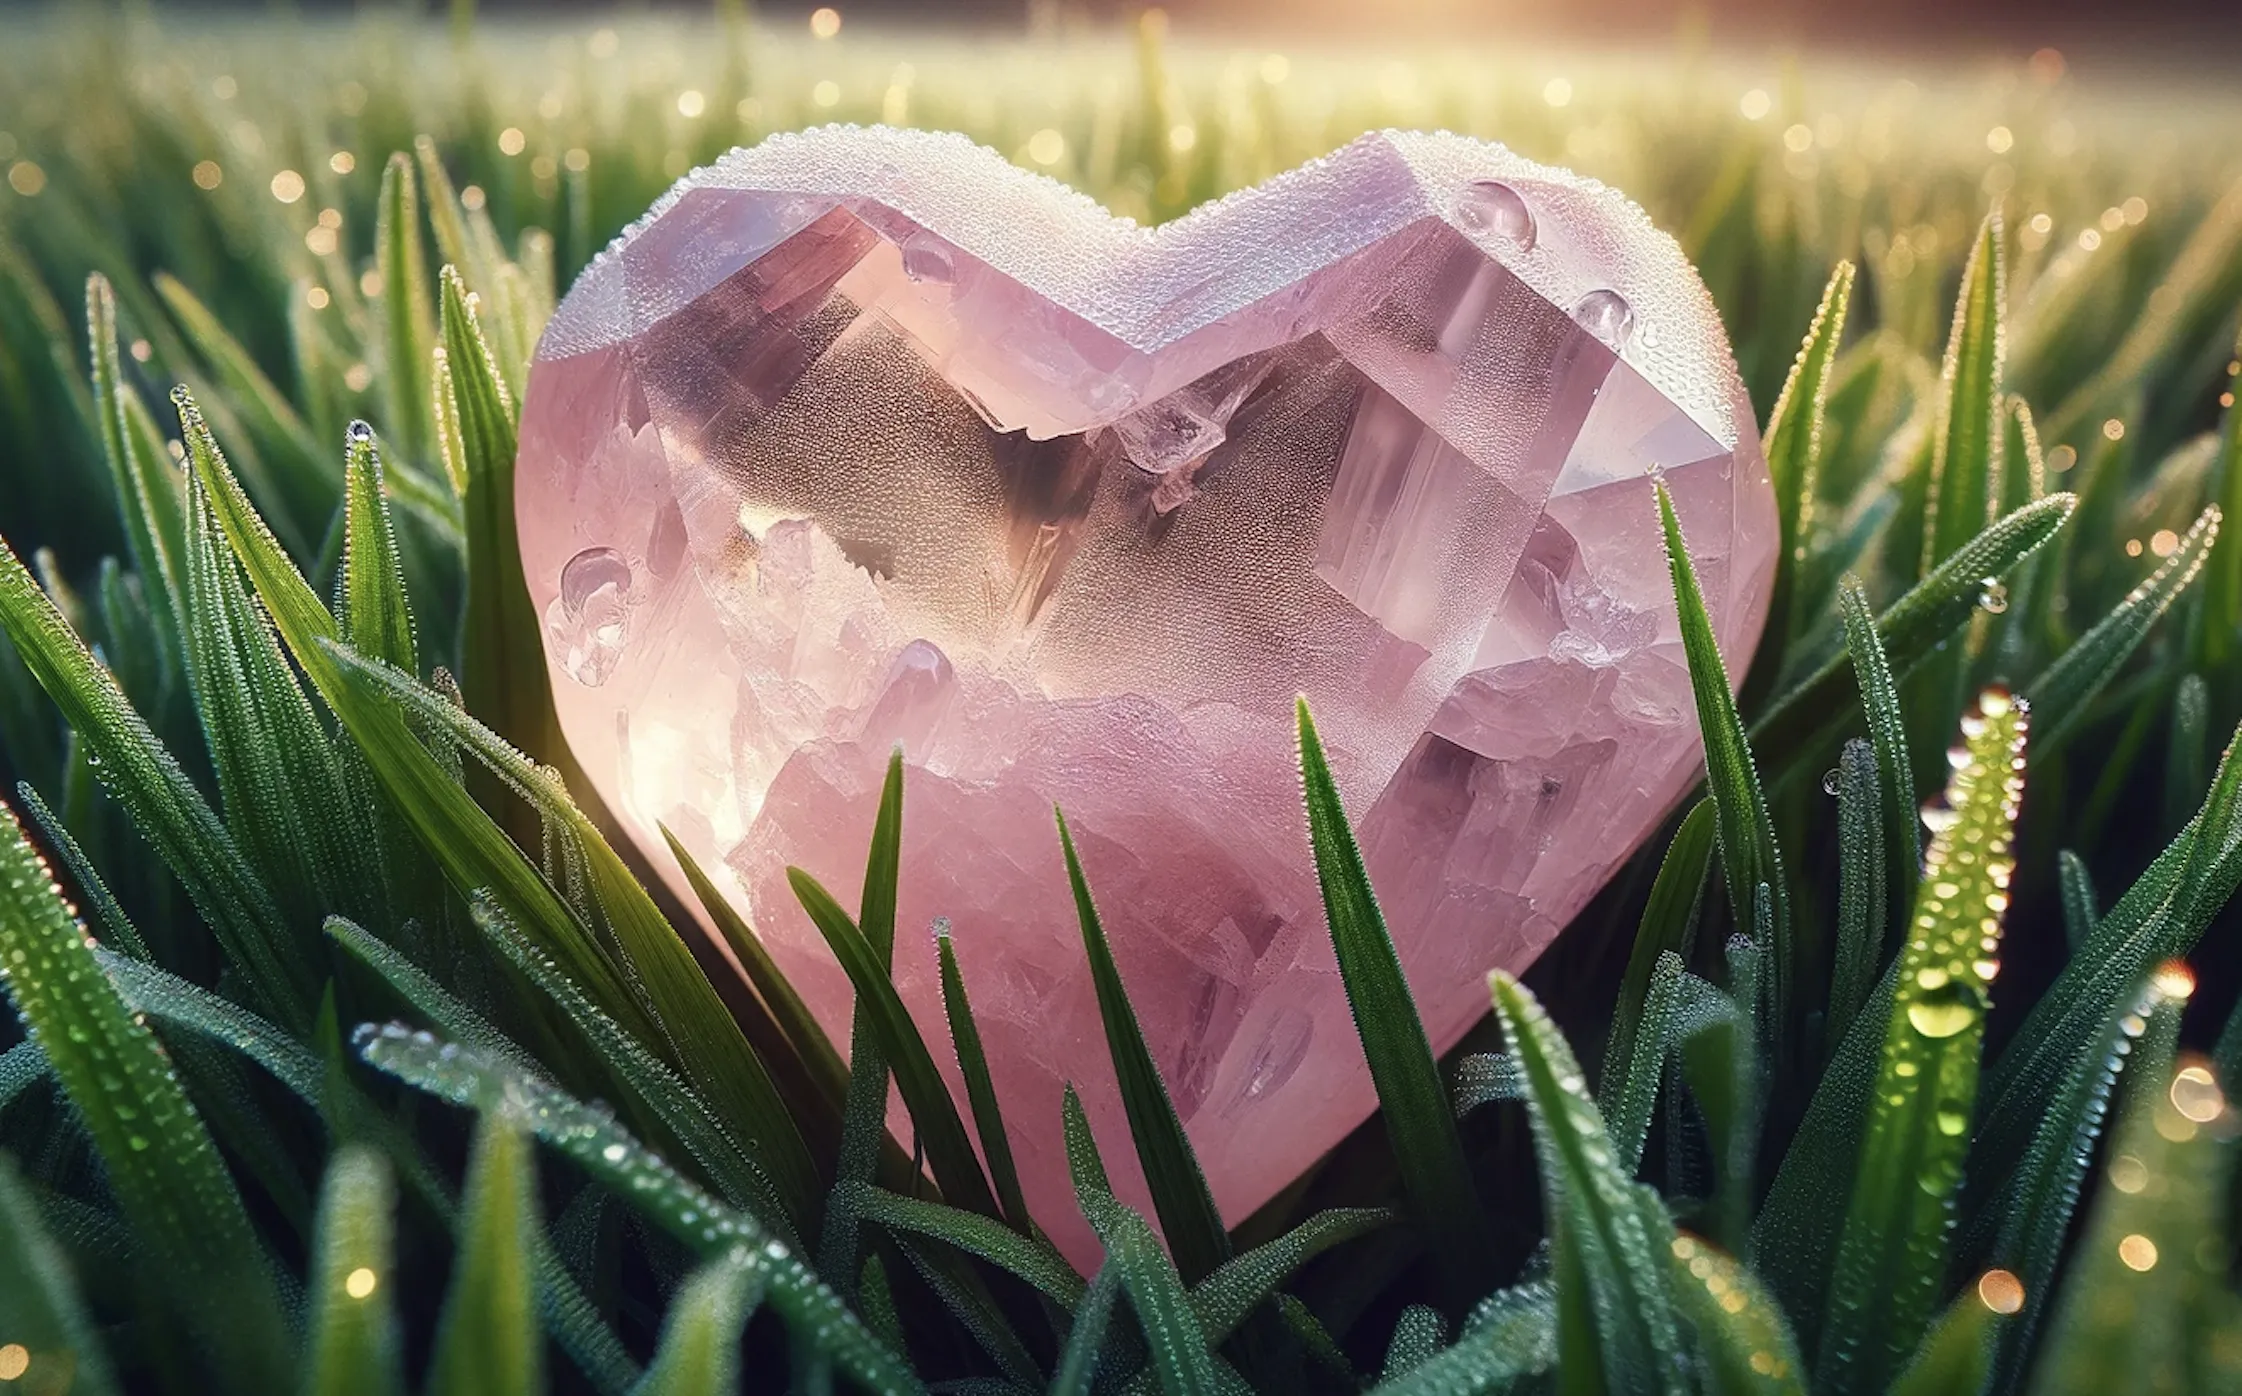 love heart shaped rose quartz crystal in grass